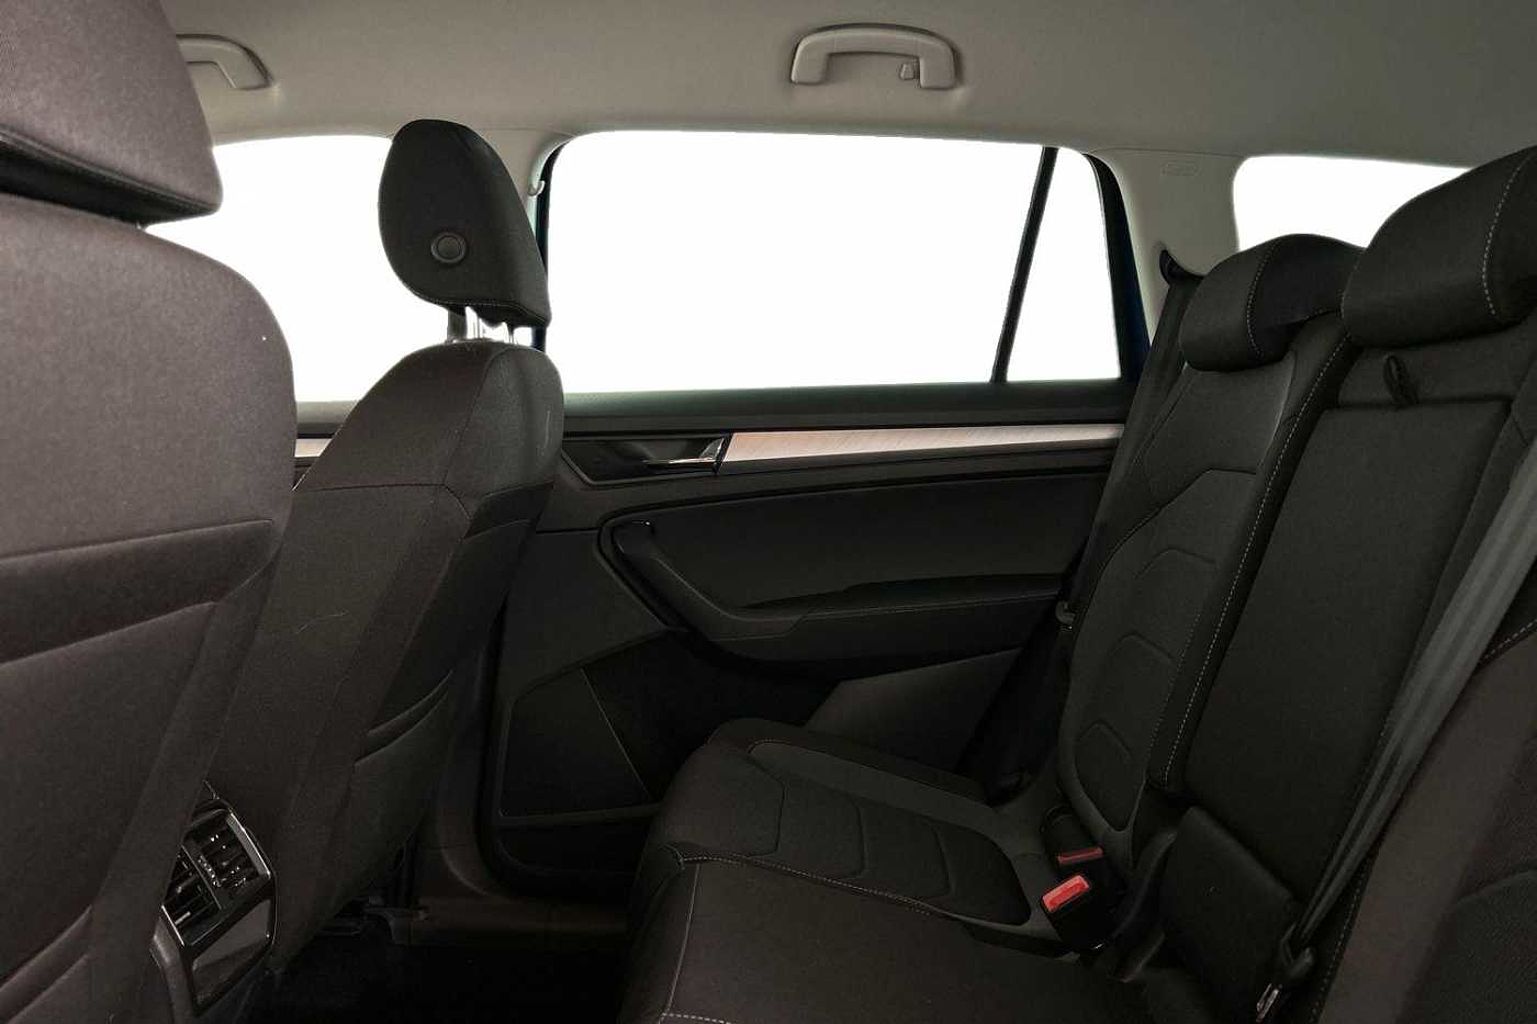 SKODA Kodiaq 1.5 TSI (150ps) SE (5 seats) ACT DSG SUV